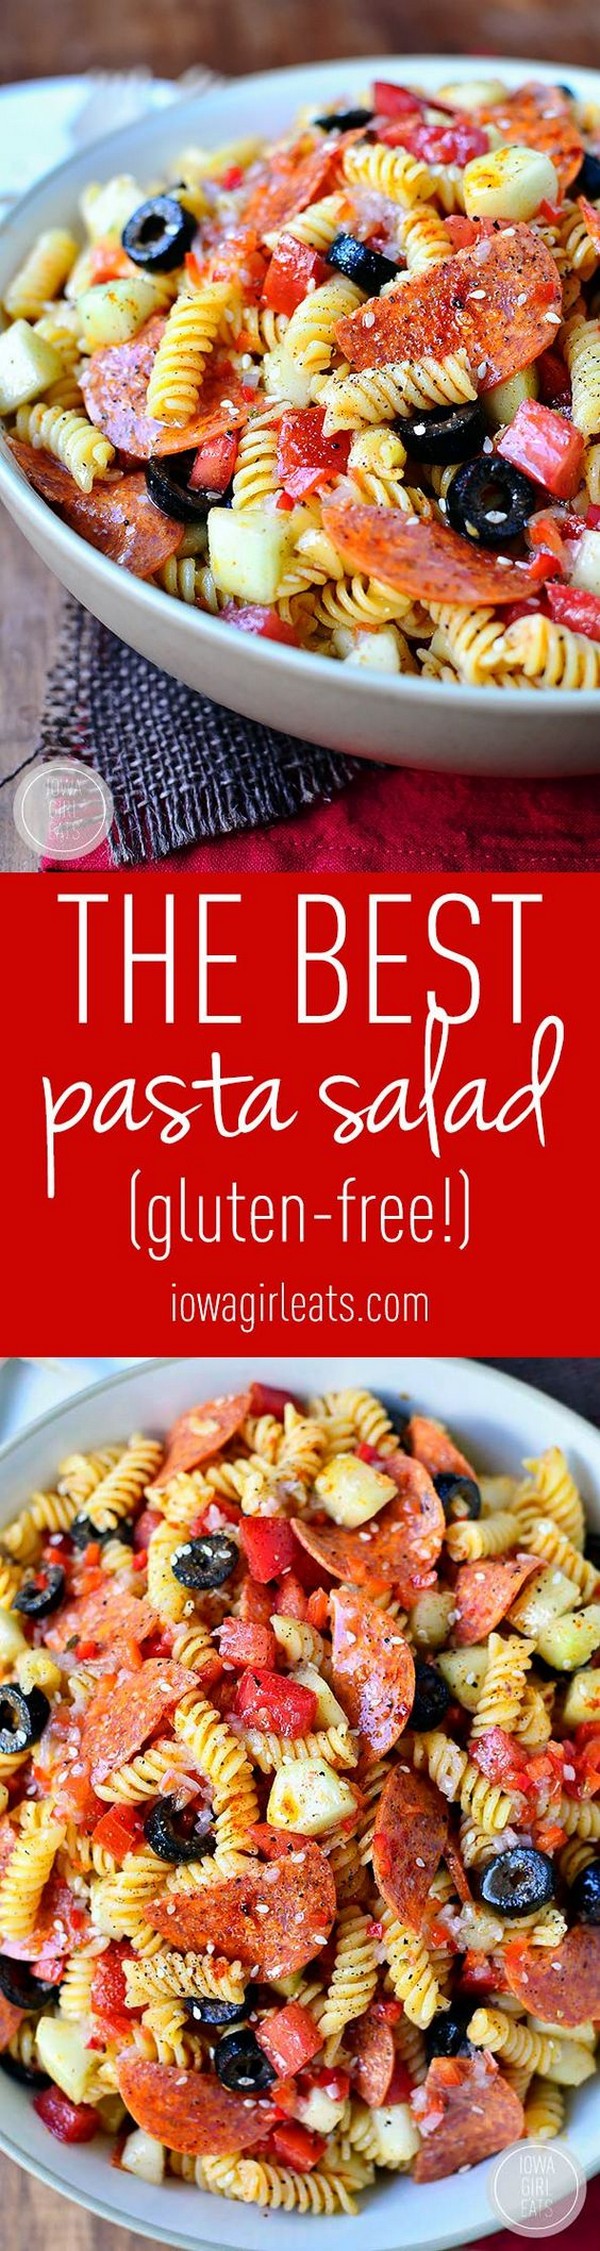 The Best Pasta Salad